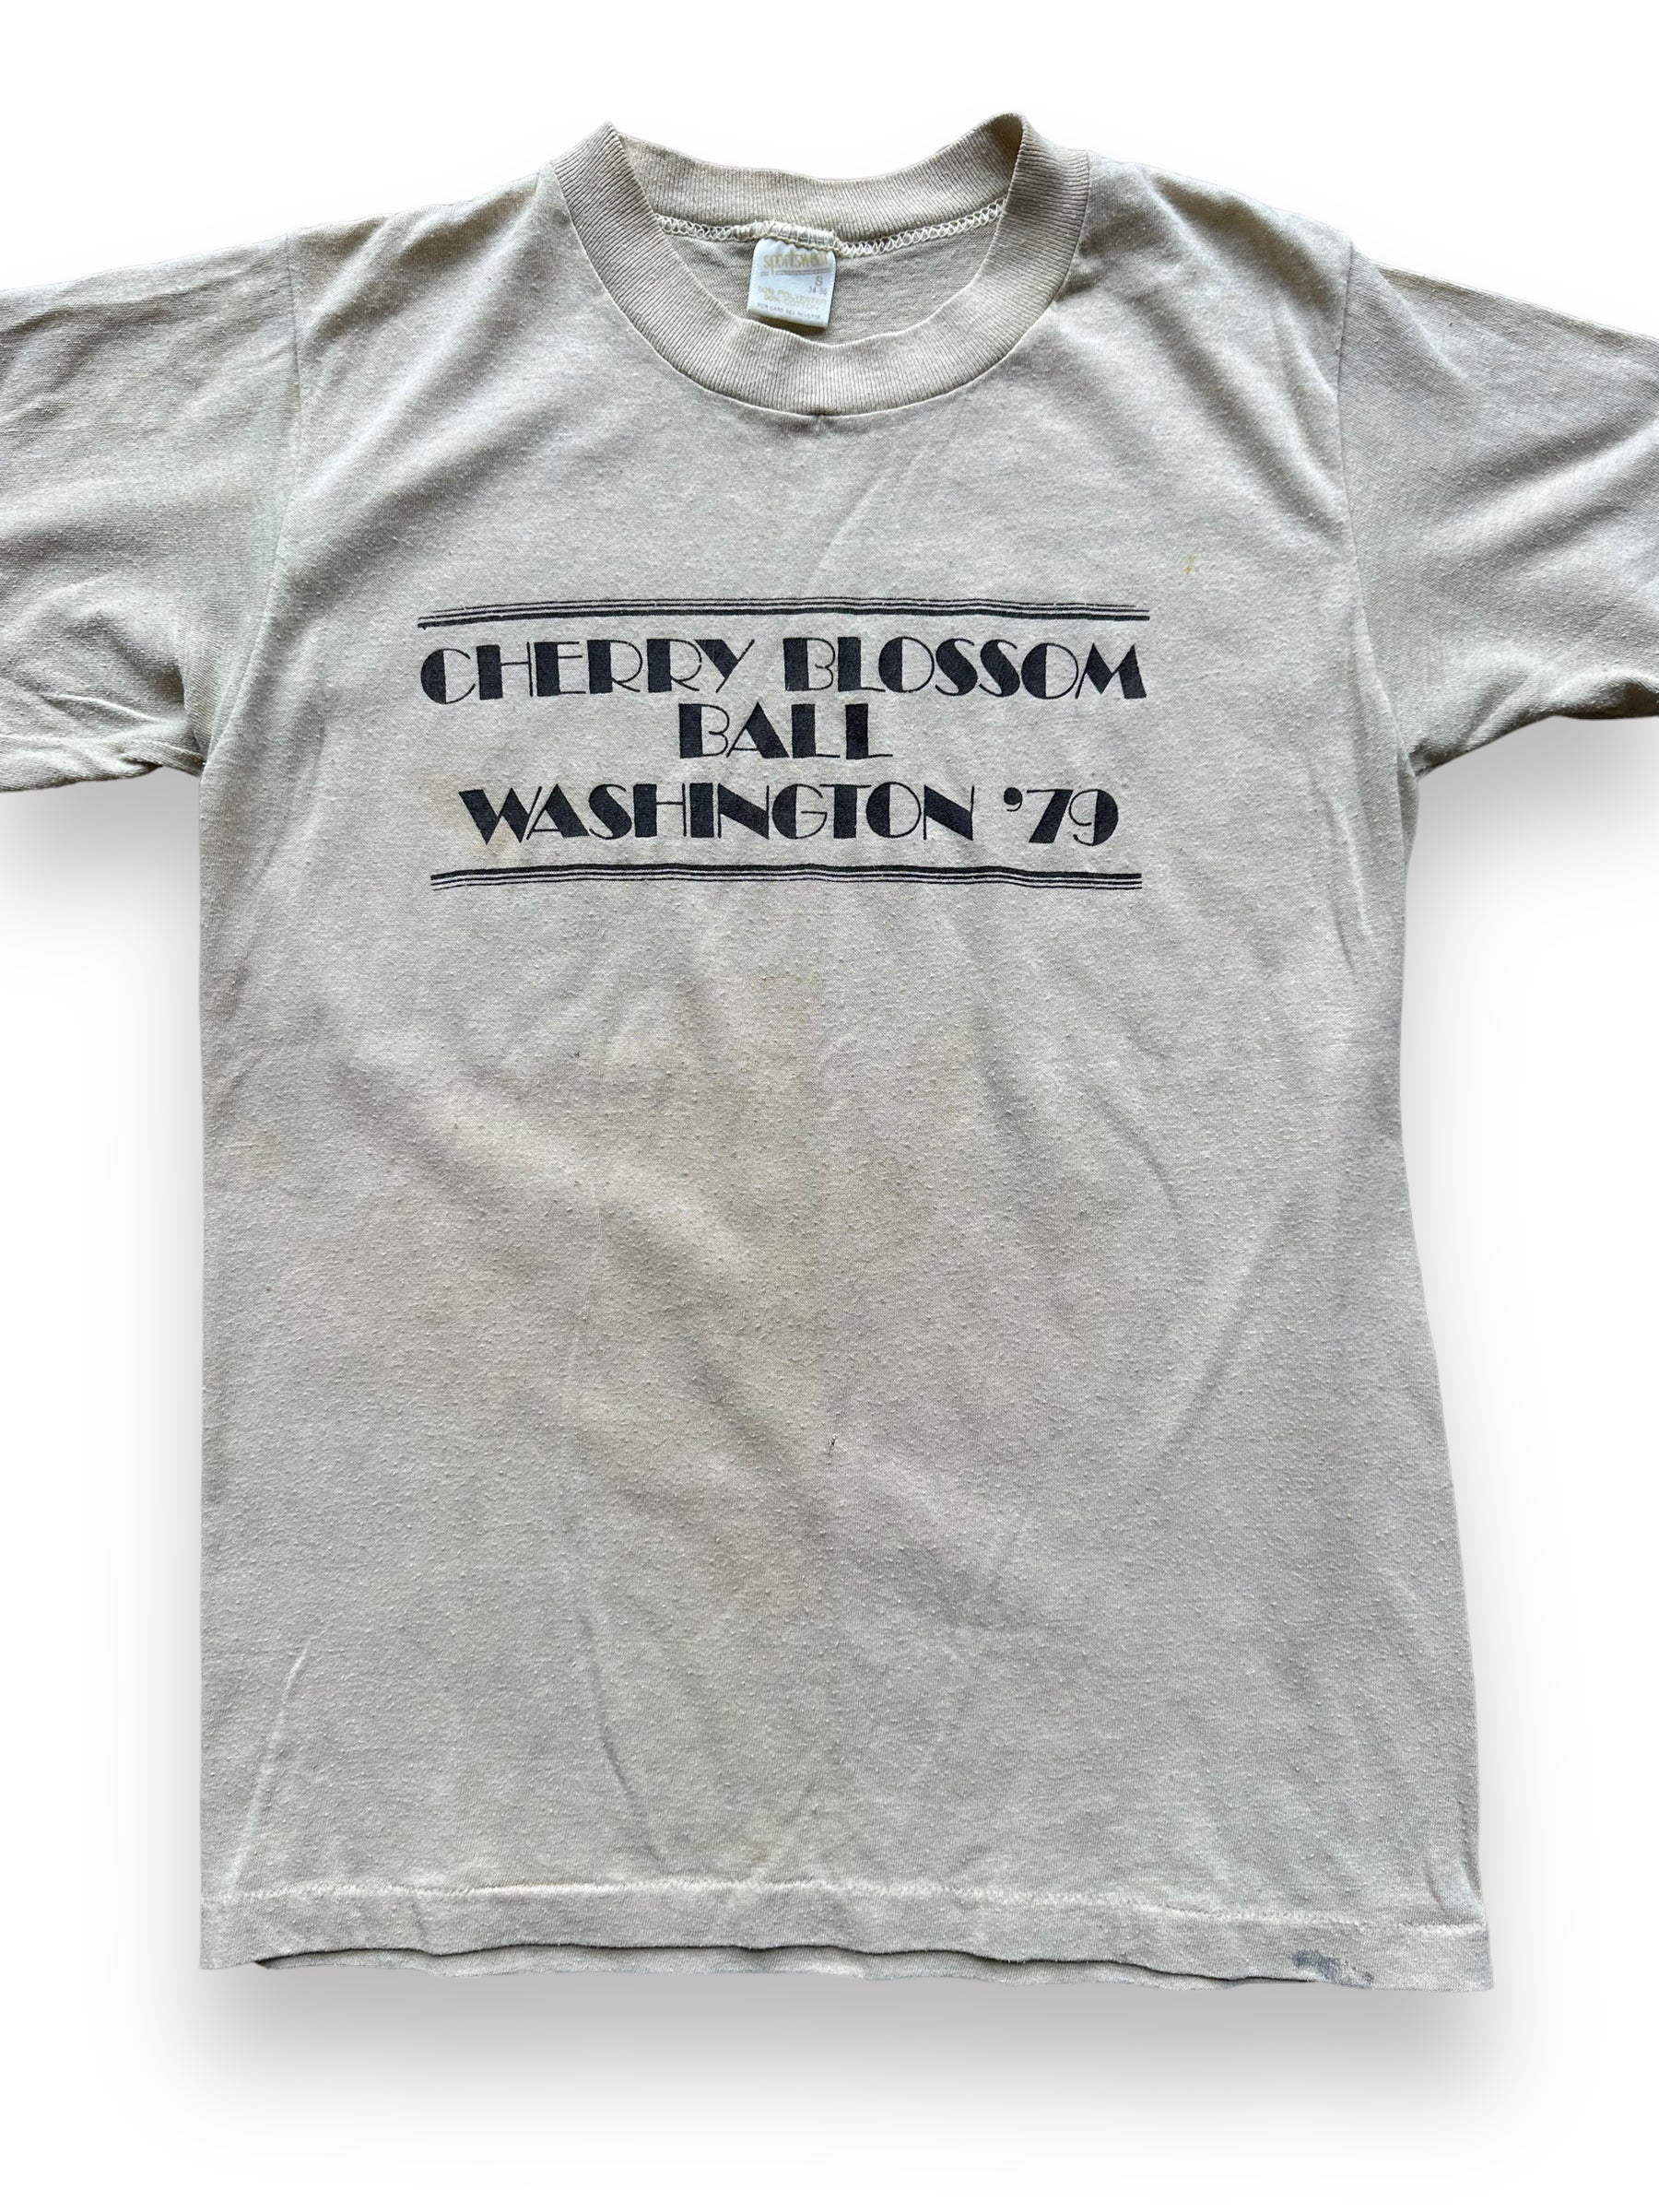 Front Detail on Vintage Washington Cherry Blossom Ball 1979 Tee SZ S | Vintage Single Stitch T-Shirts Seattle | Barn Owl Vintage Tees Seattle